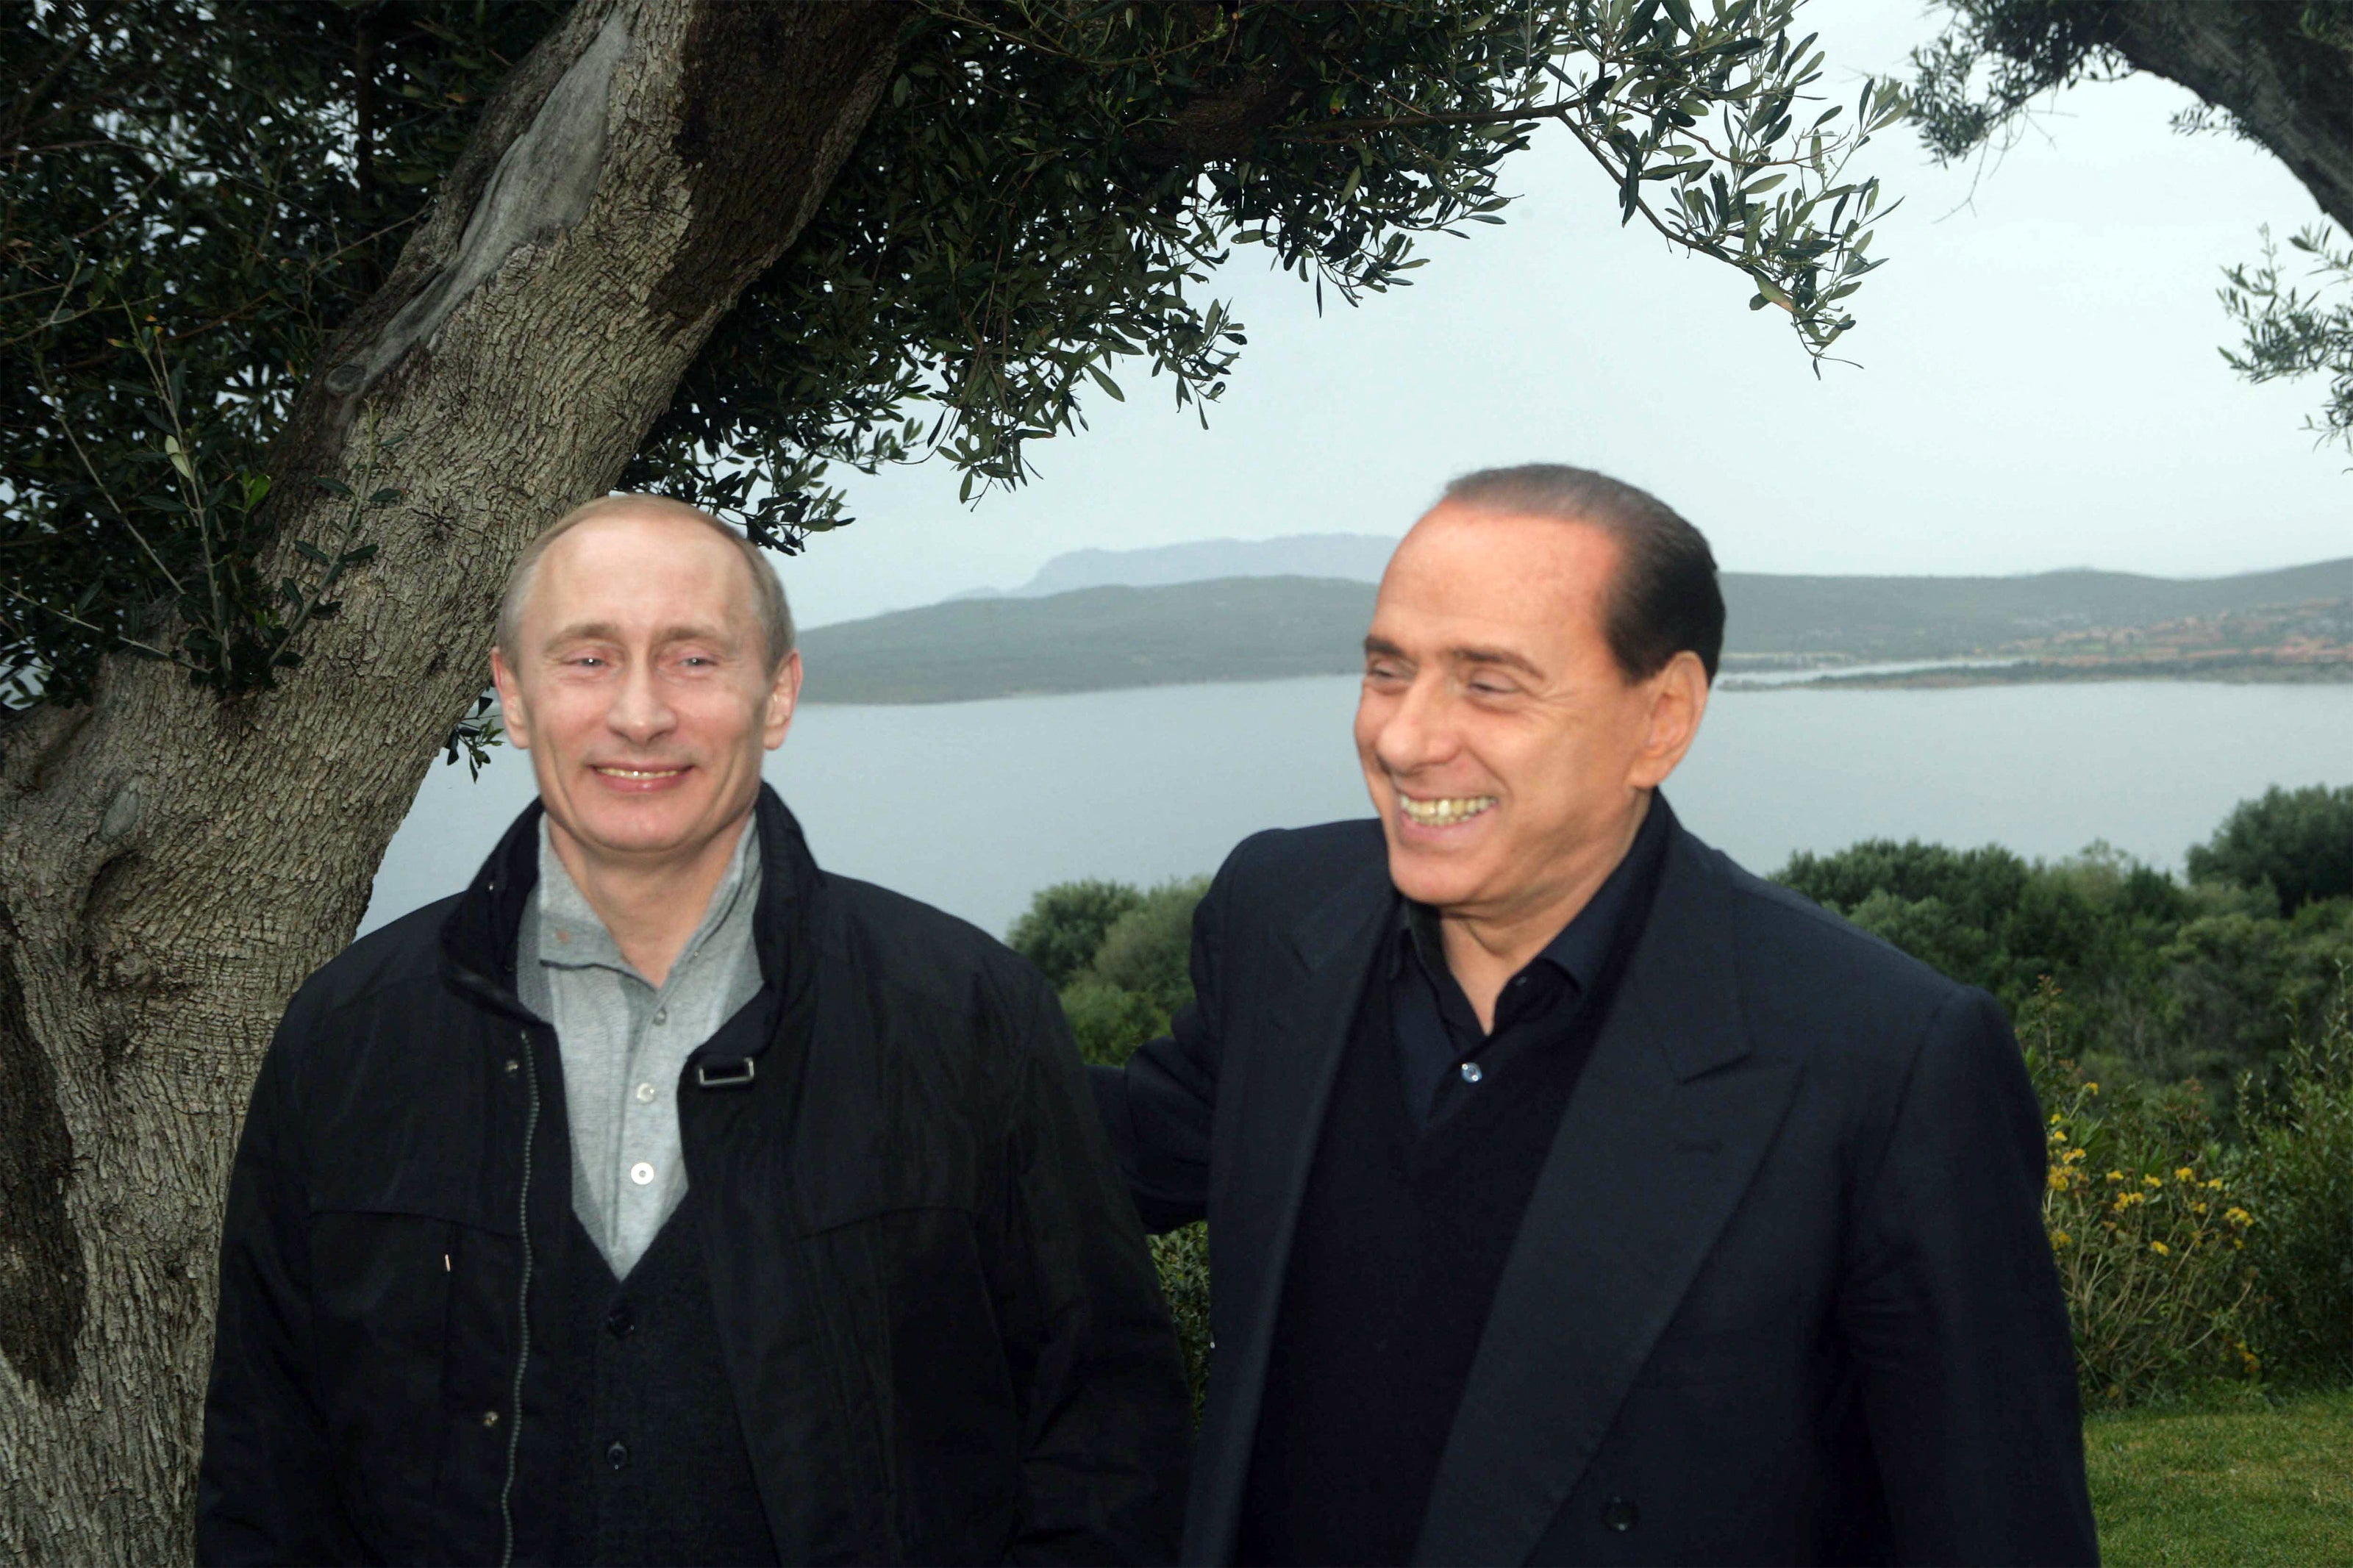 Putin (L) and the late Italian prime minister Berlusconi at the latter private summer residence villa 'La Certosa'